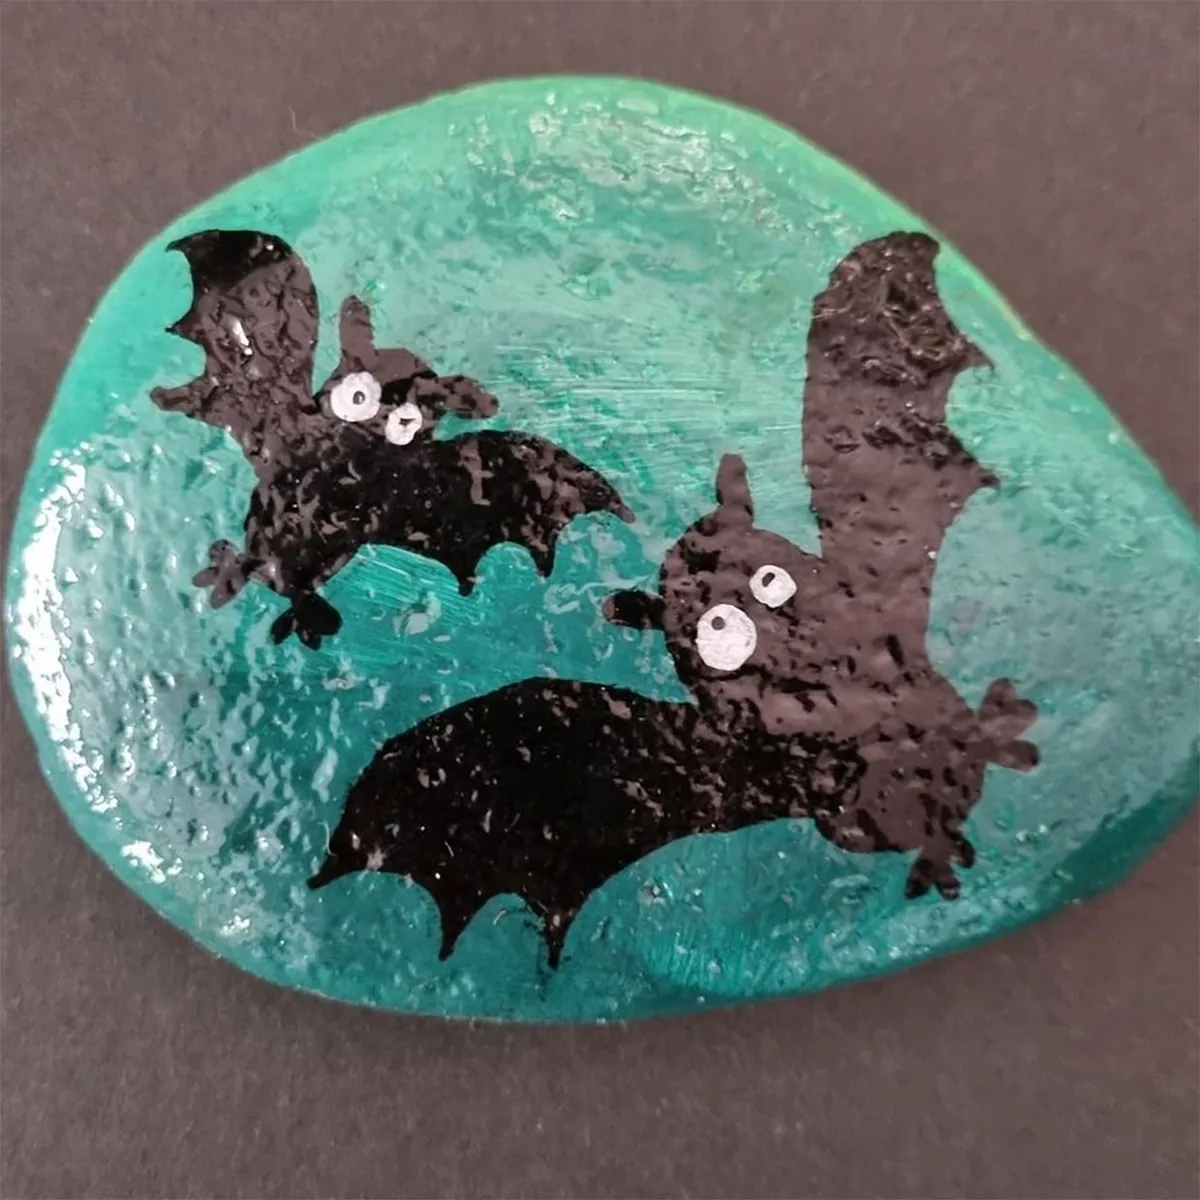 Halloween rock painting ideas – bats